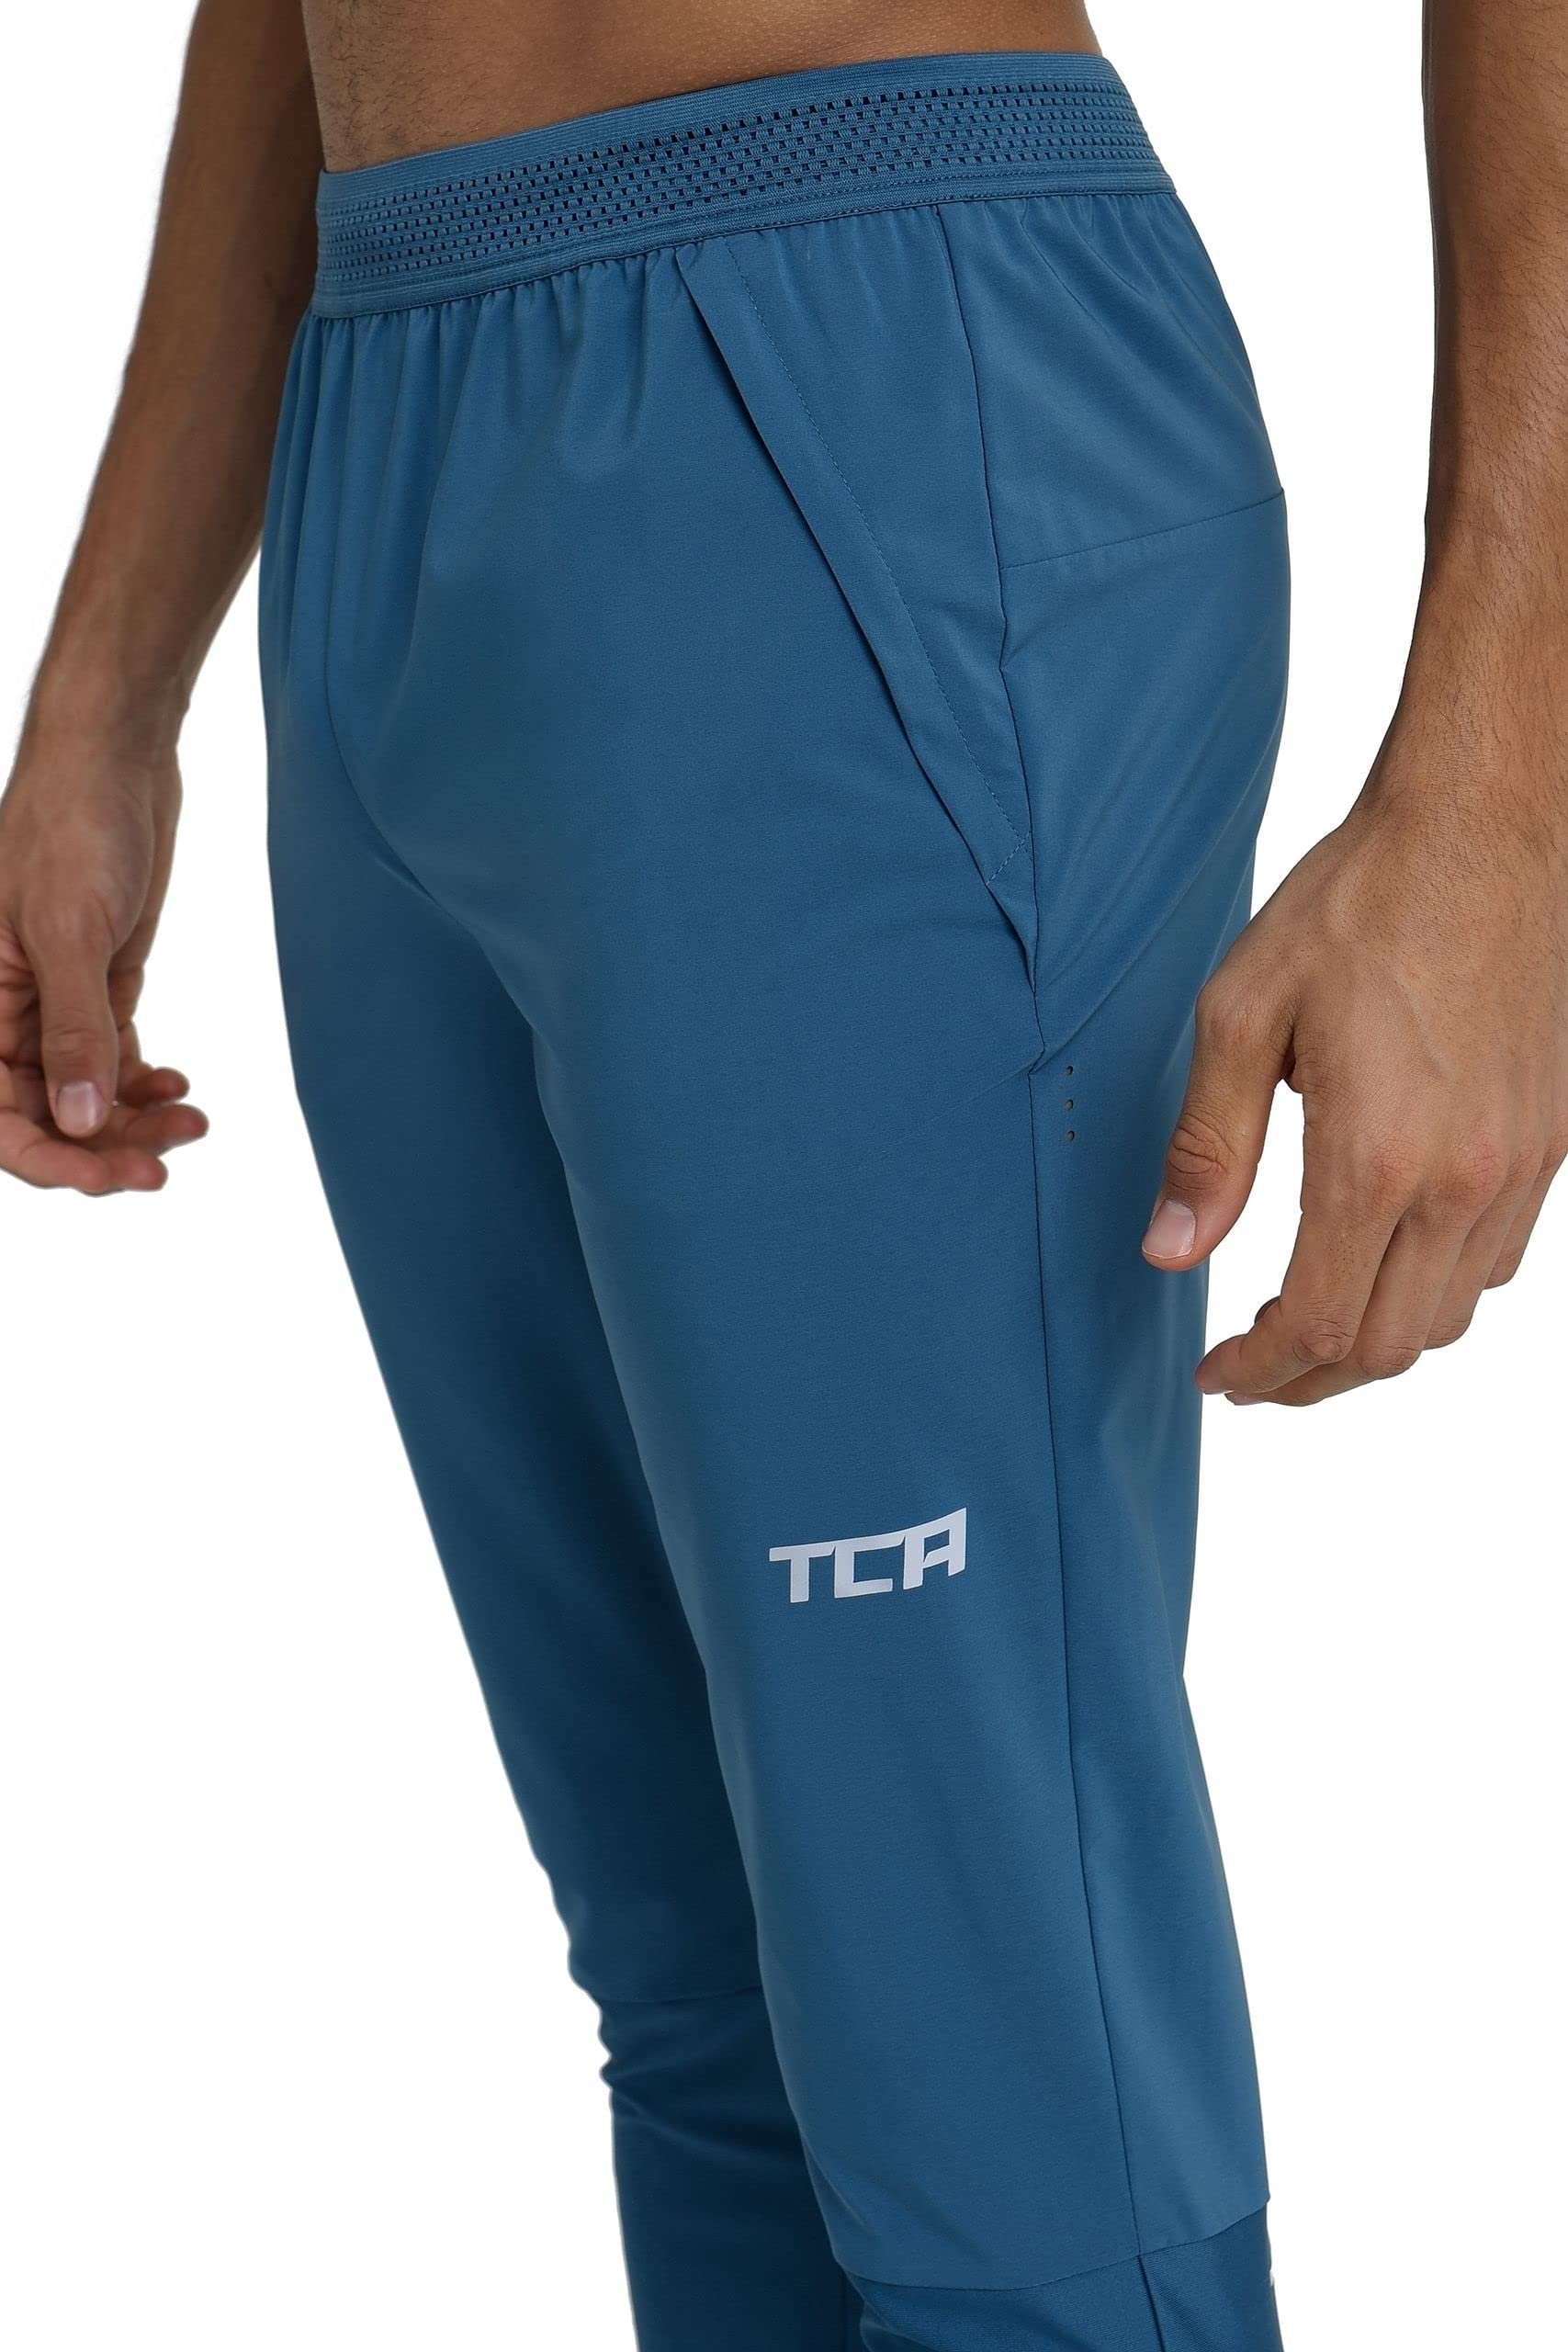 - TCA Reißverschlusstaschen Laufhose Herren Blau mit TCA Jogginghose